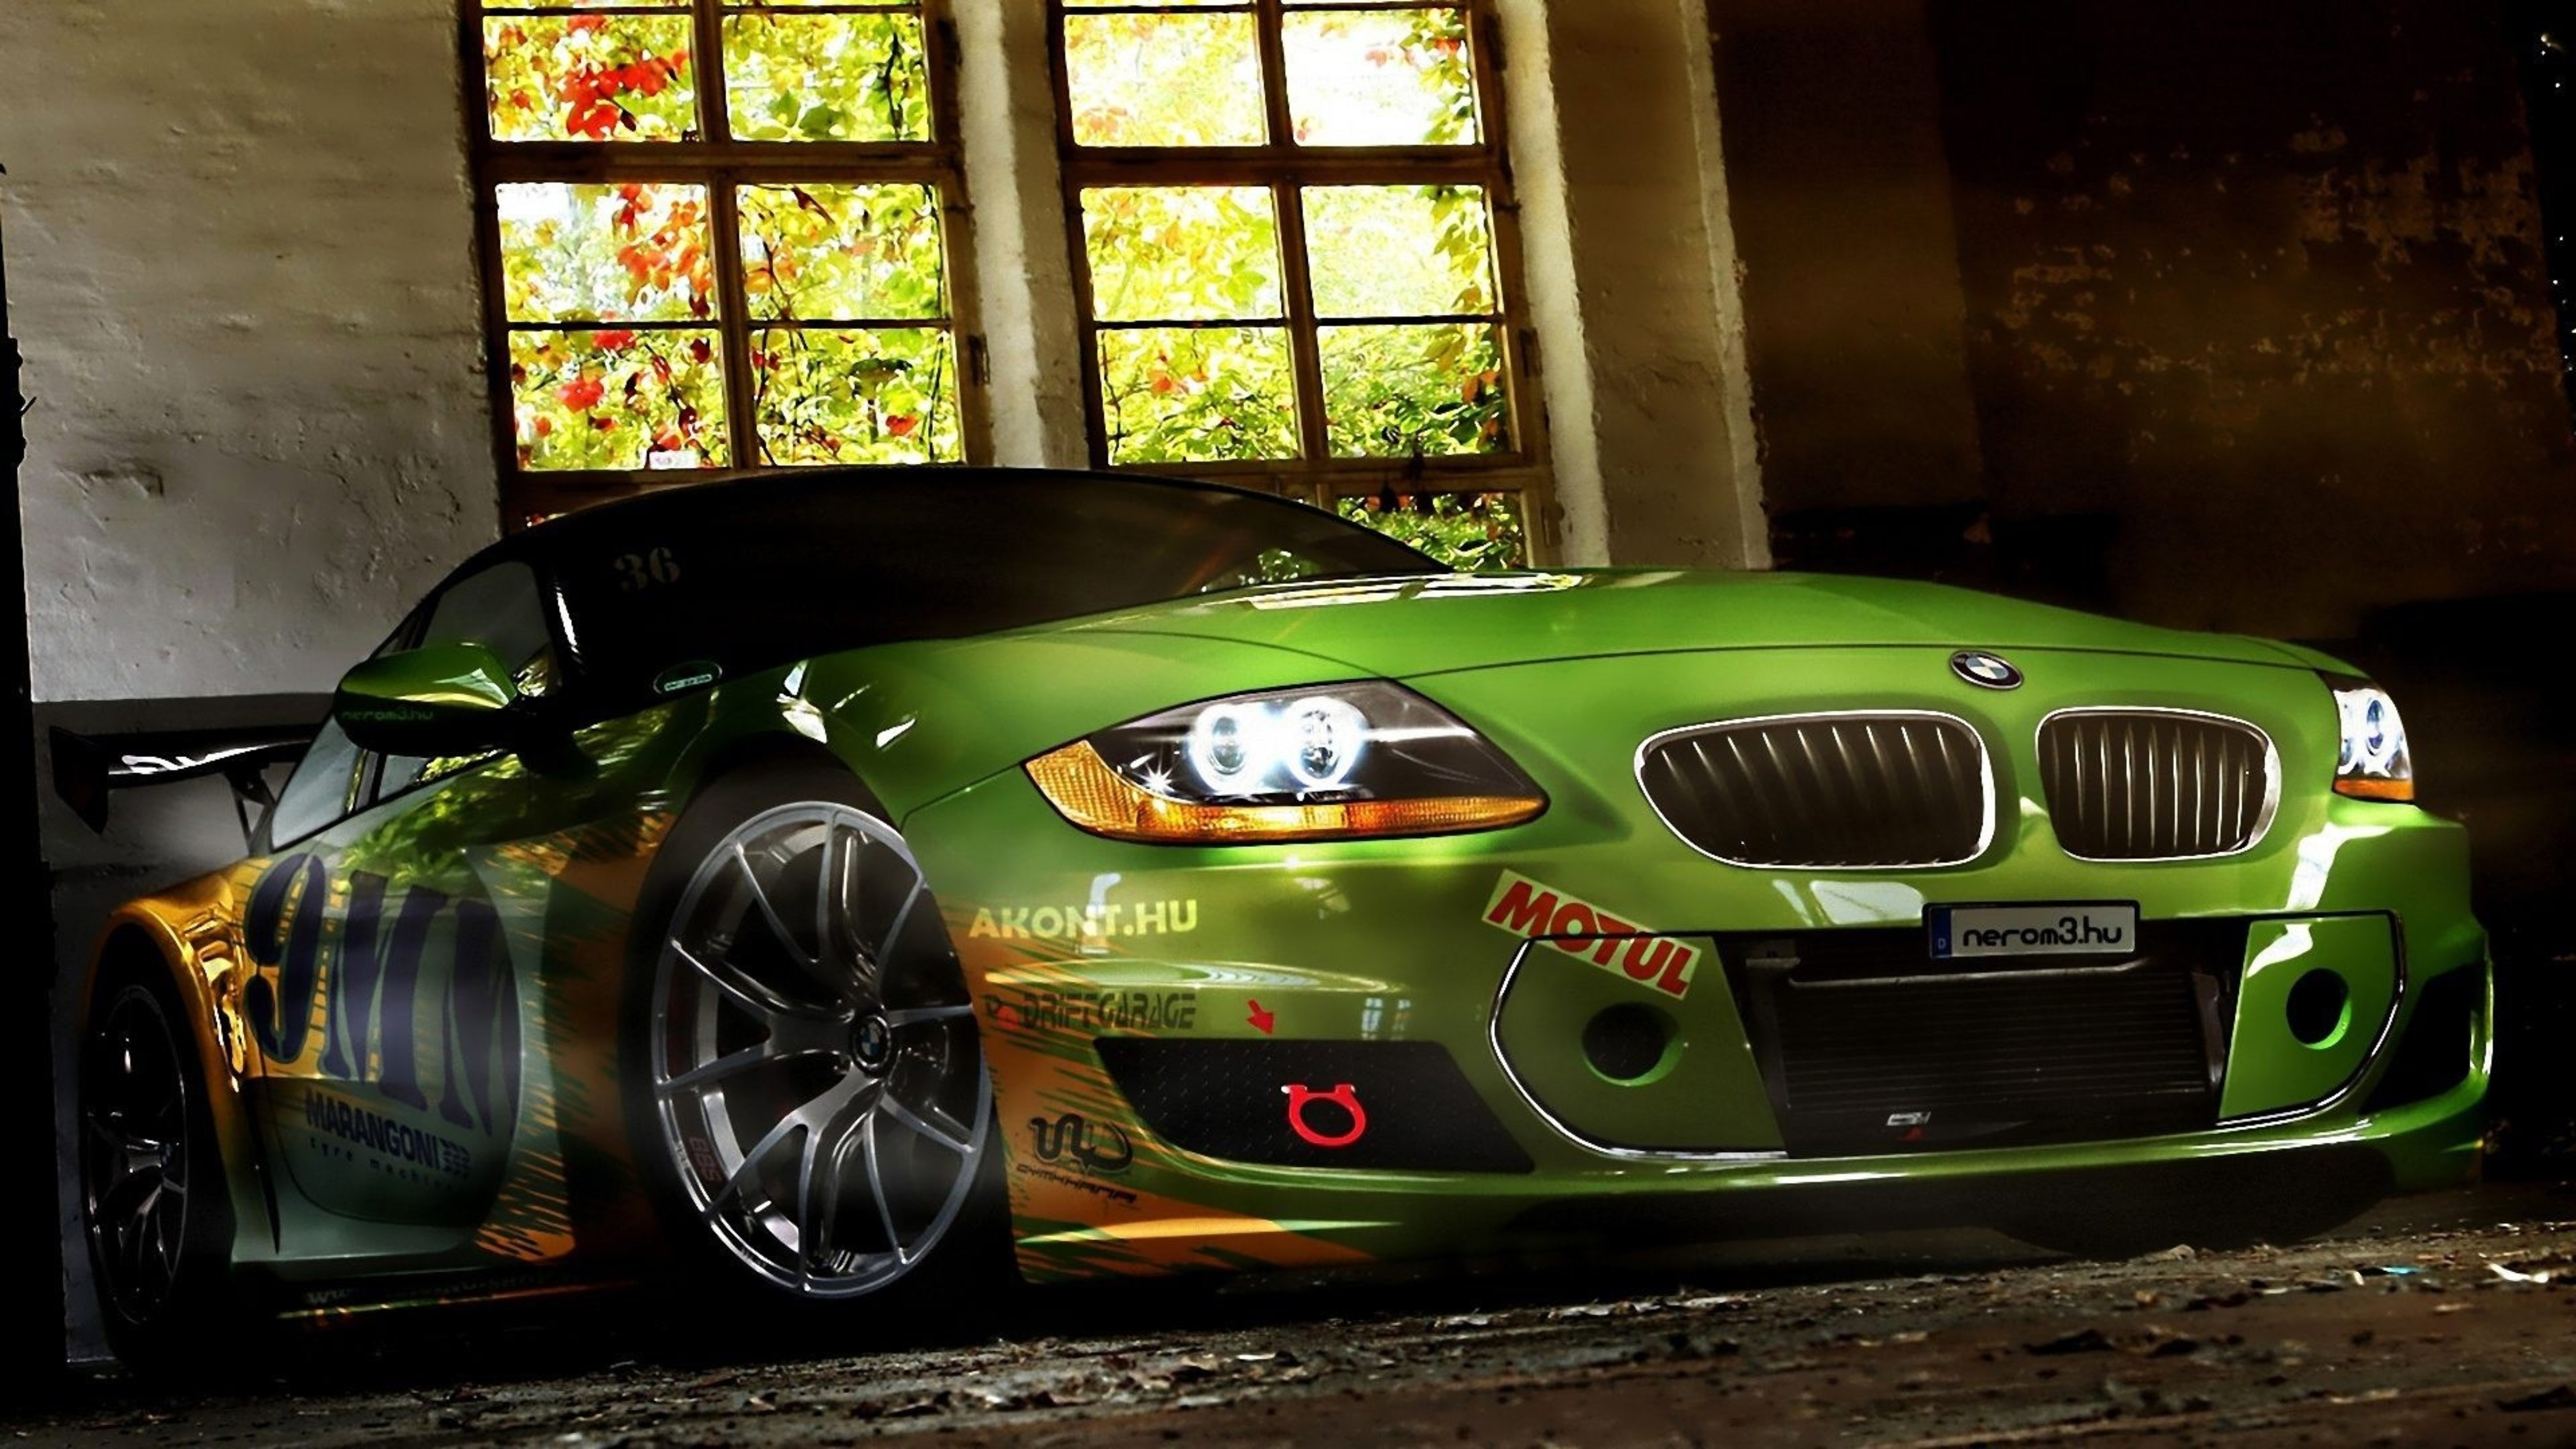 Обои на экран машины. BMW e92 Green. Green BMW z4 car. BMW m5 неон.